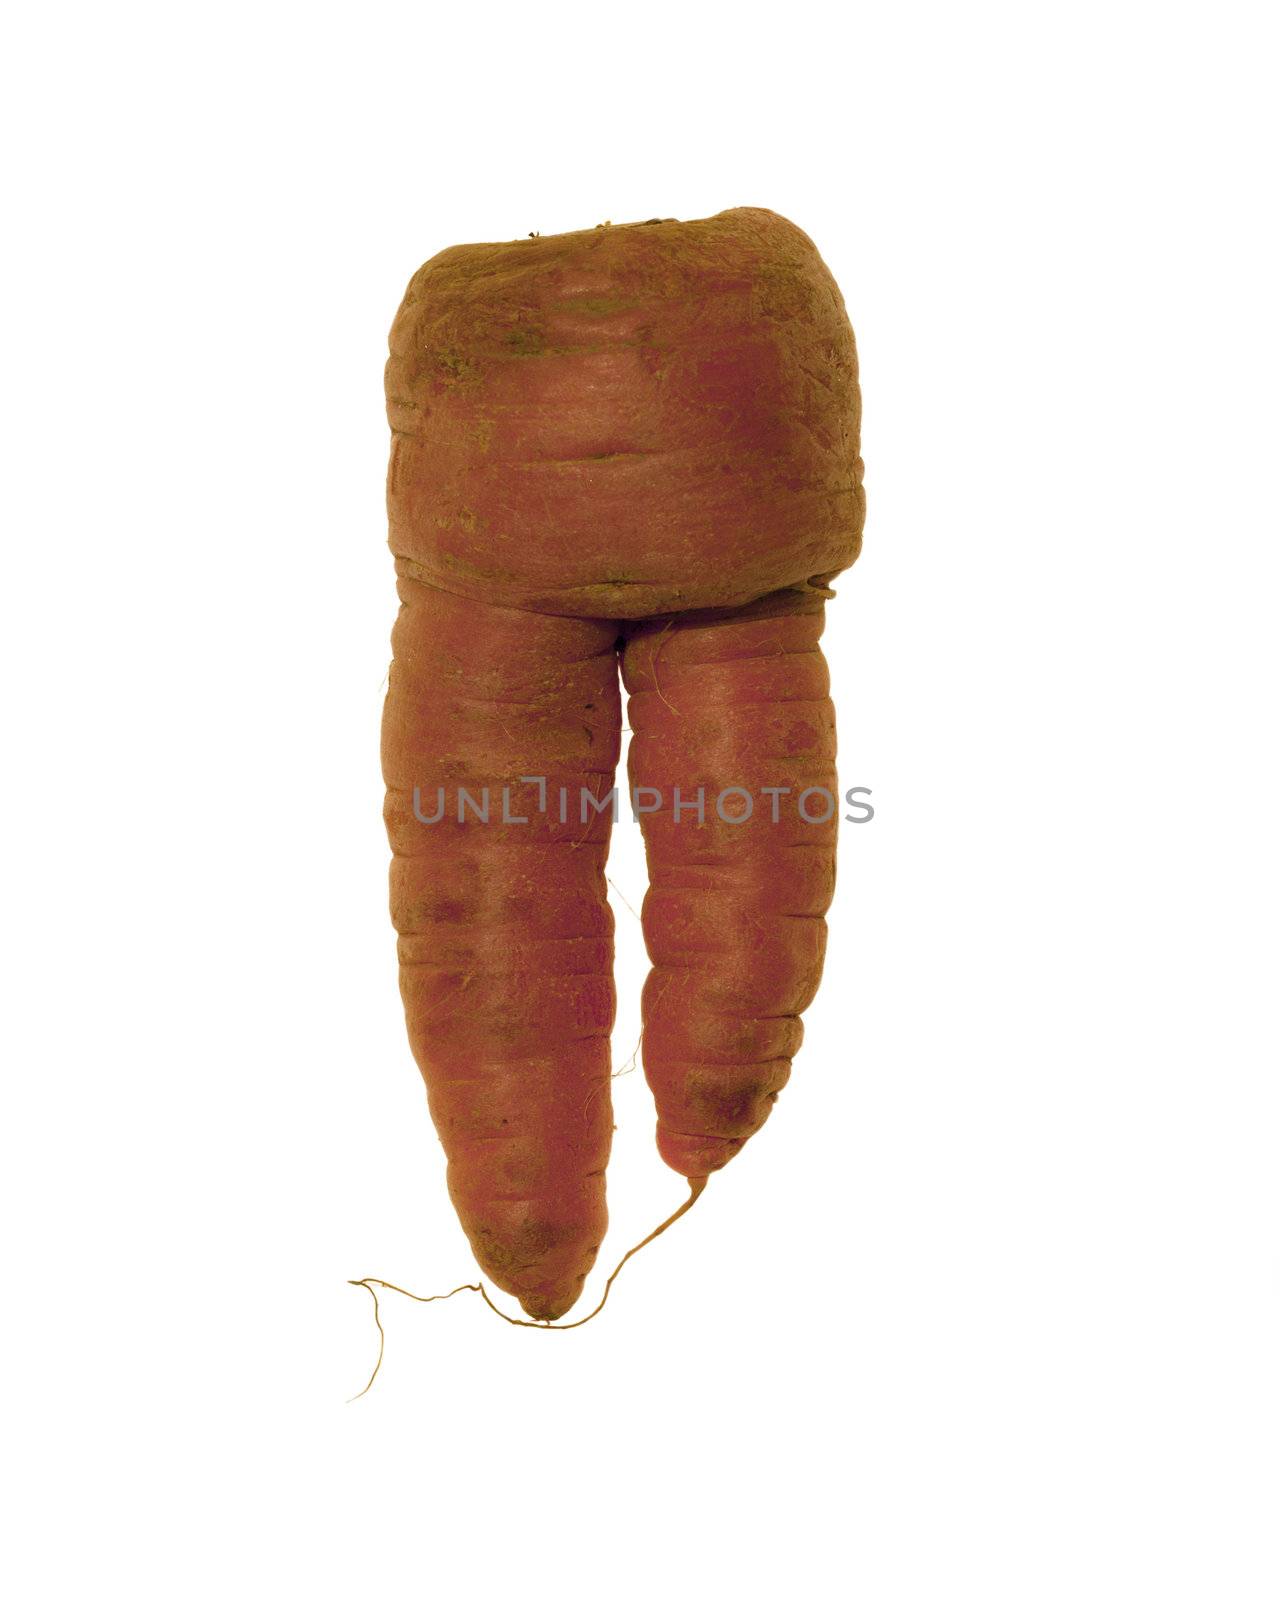 Carrot Biped  by DirkWestphal